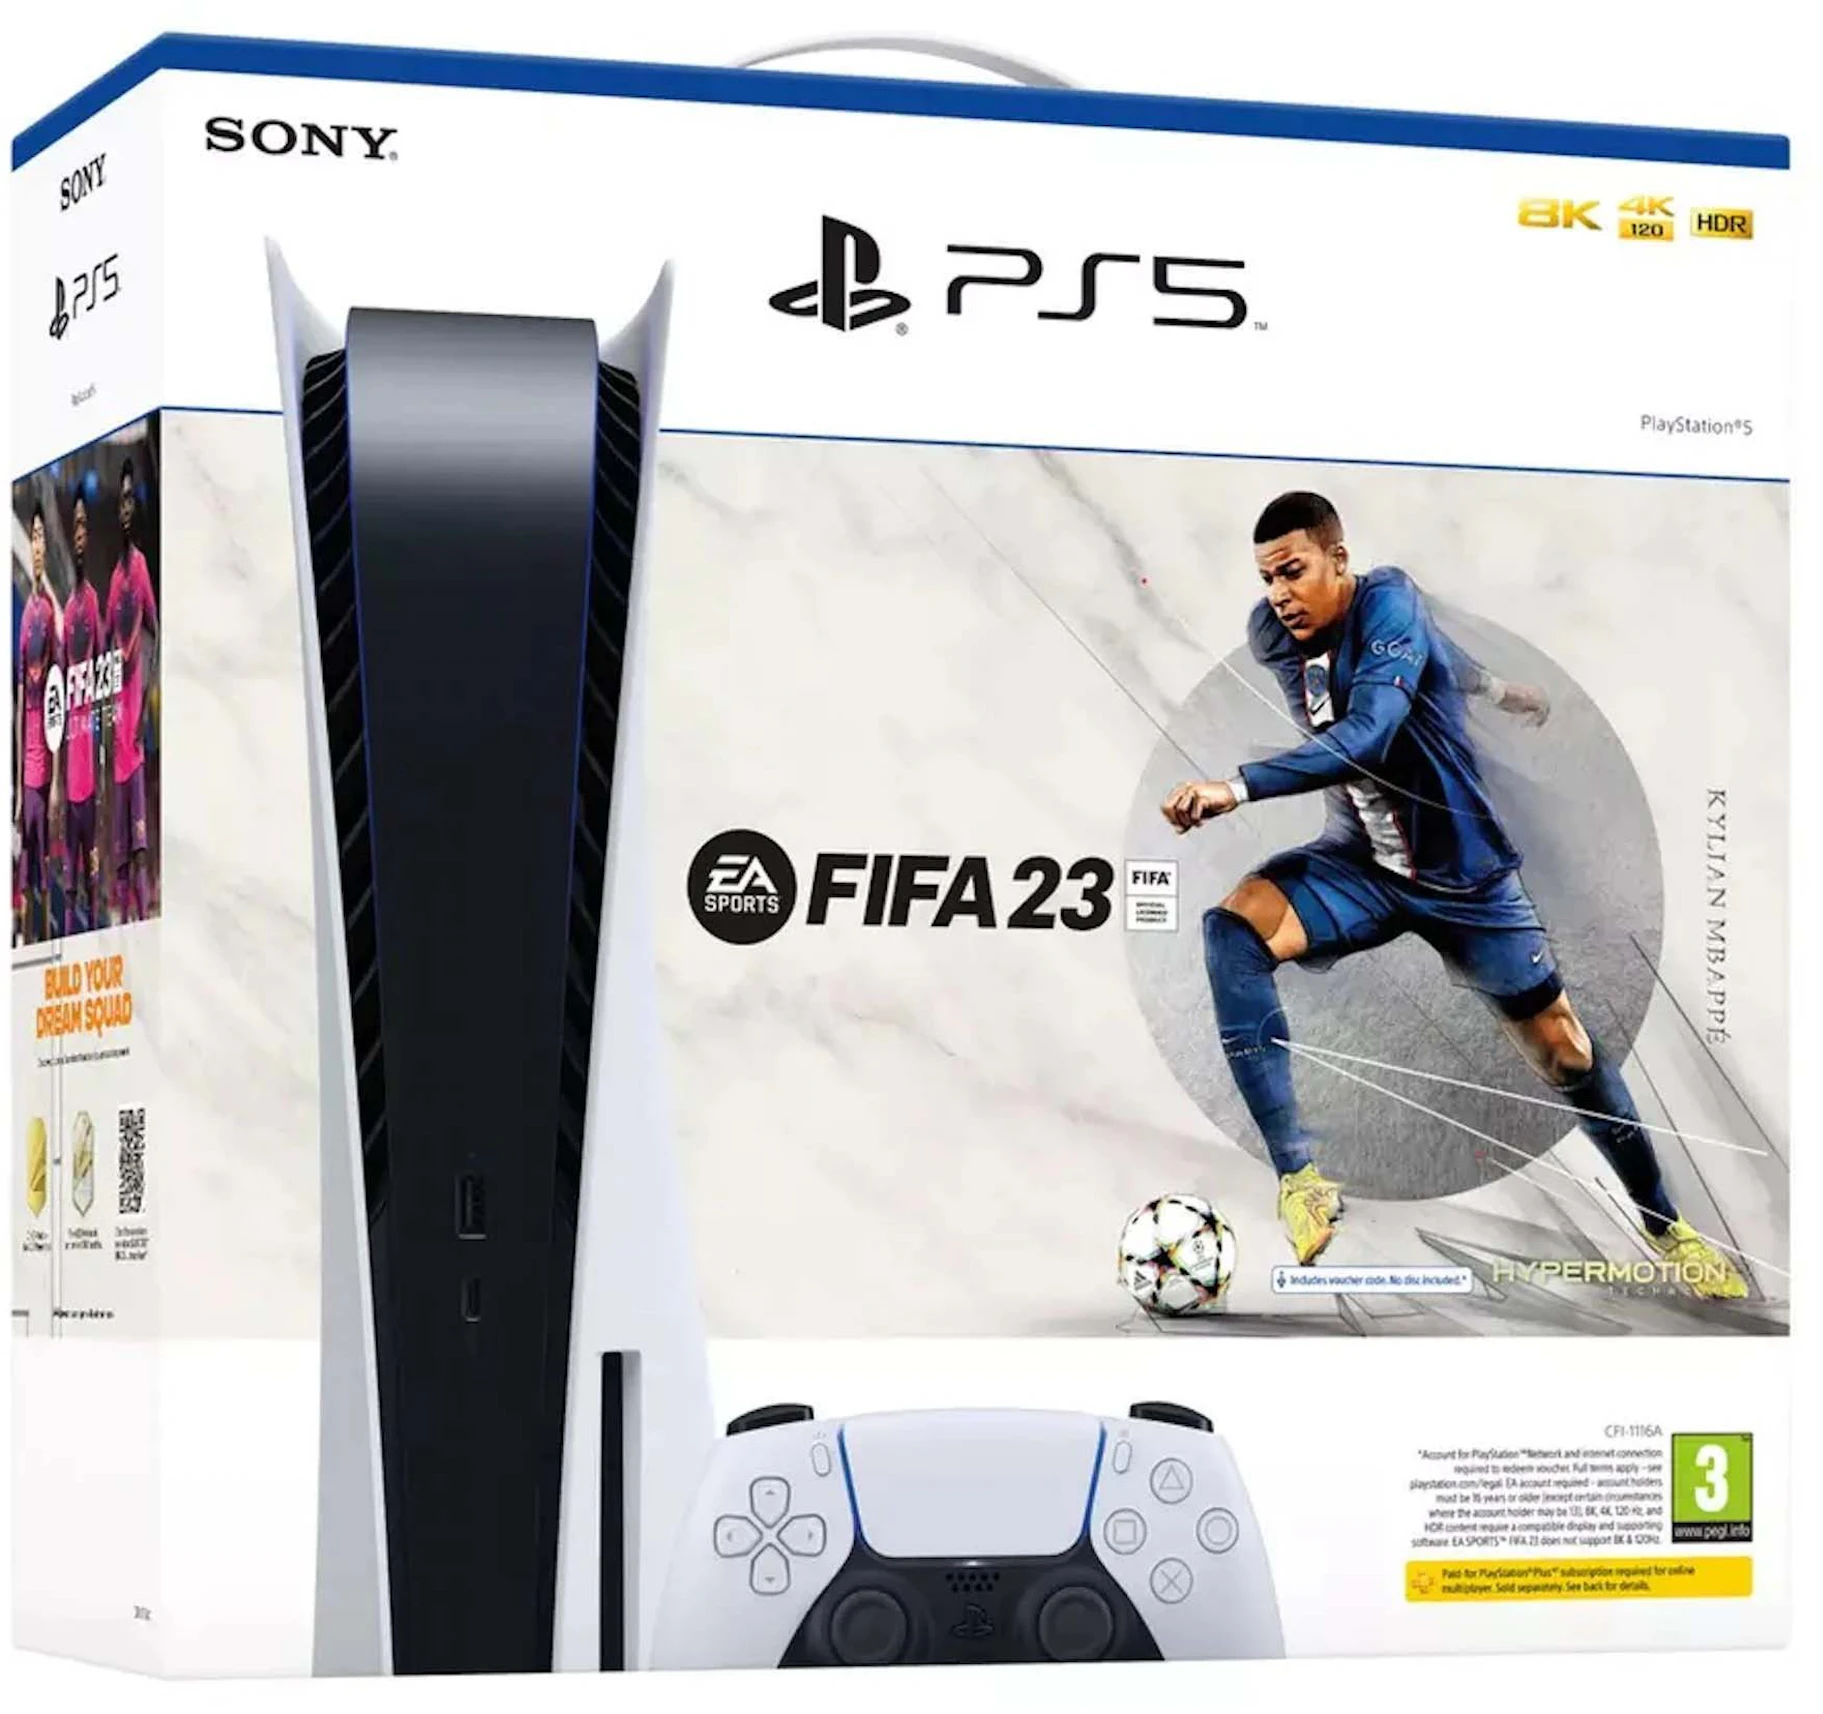 Sony PlayStation 5 PS5 Blu-ray Edition SPORTS FIFA 23 Console Bundle (EU 9438199 - US